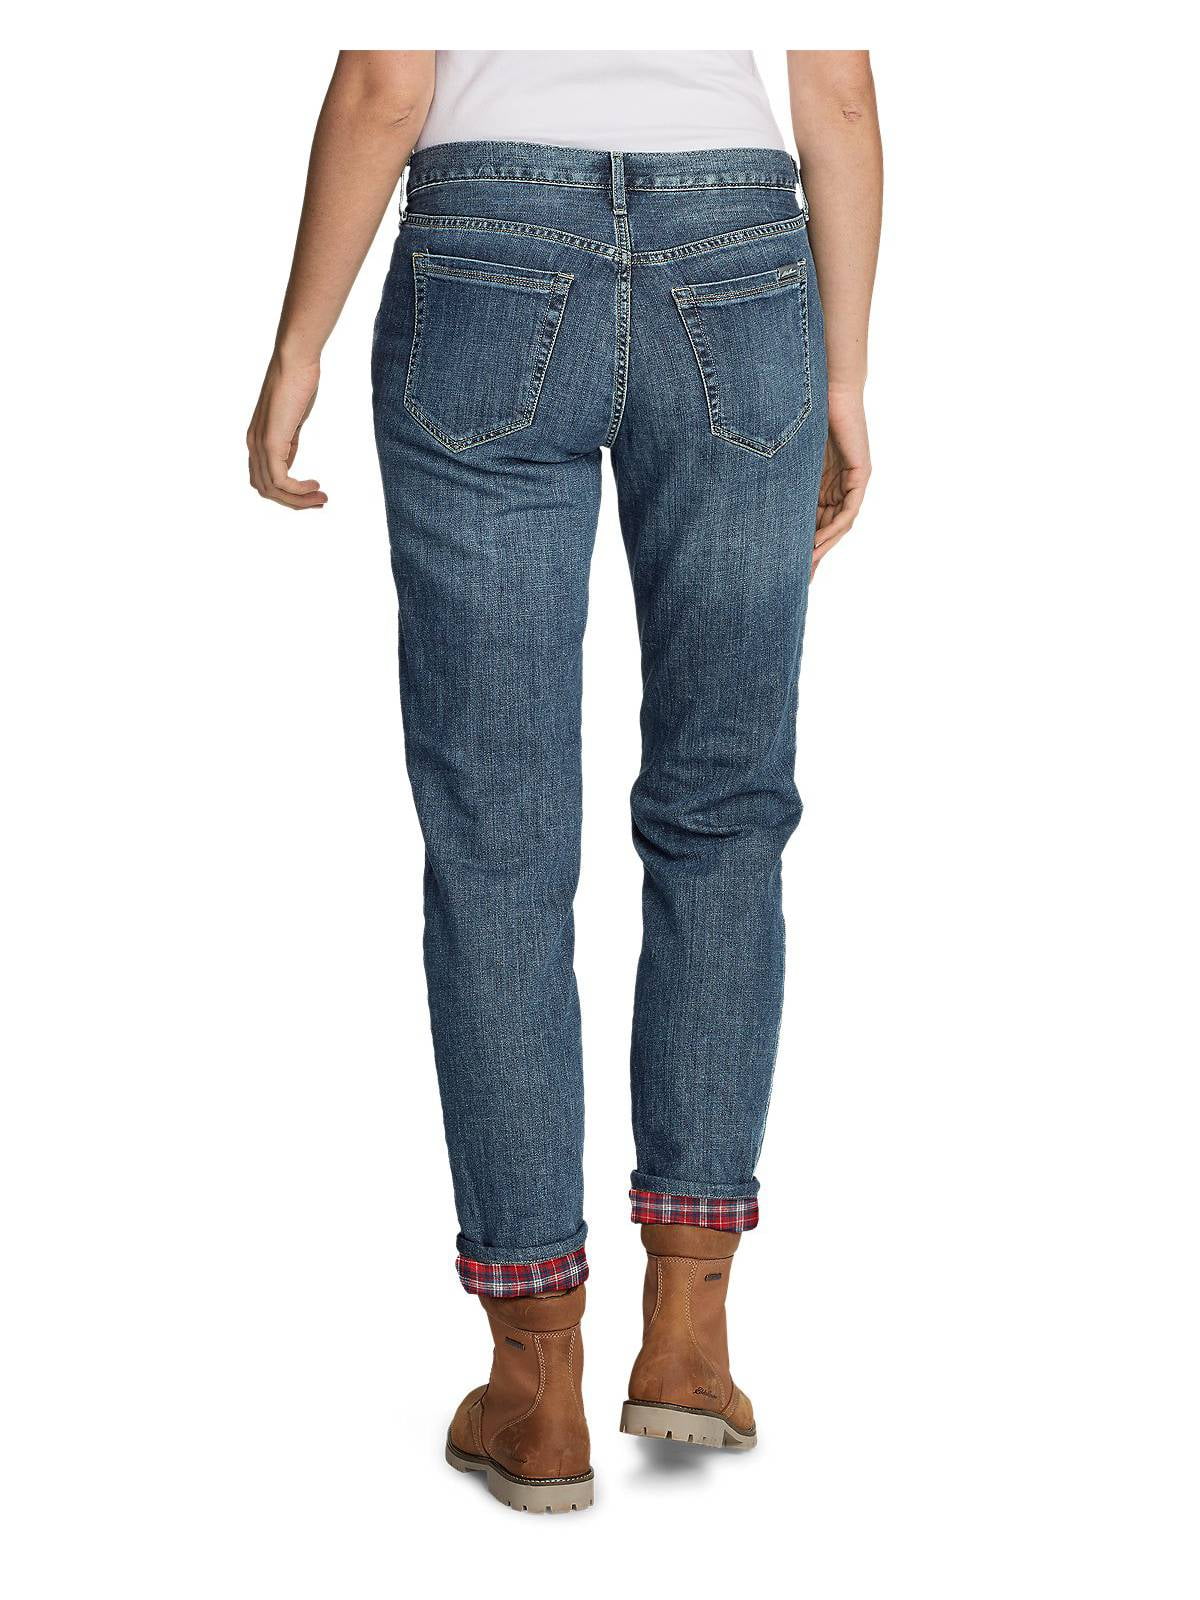 eddie bauer flannel lined jeans